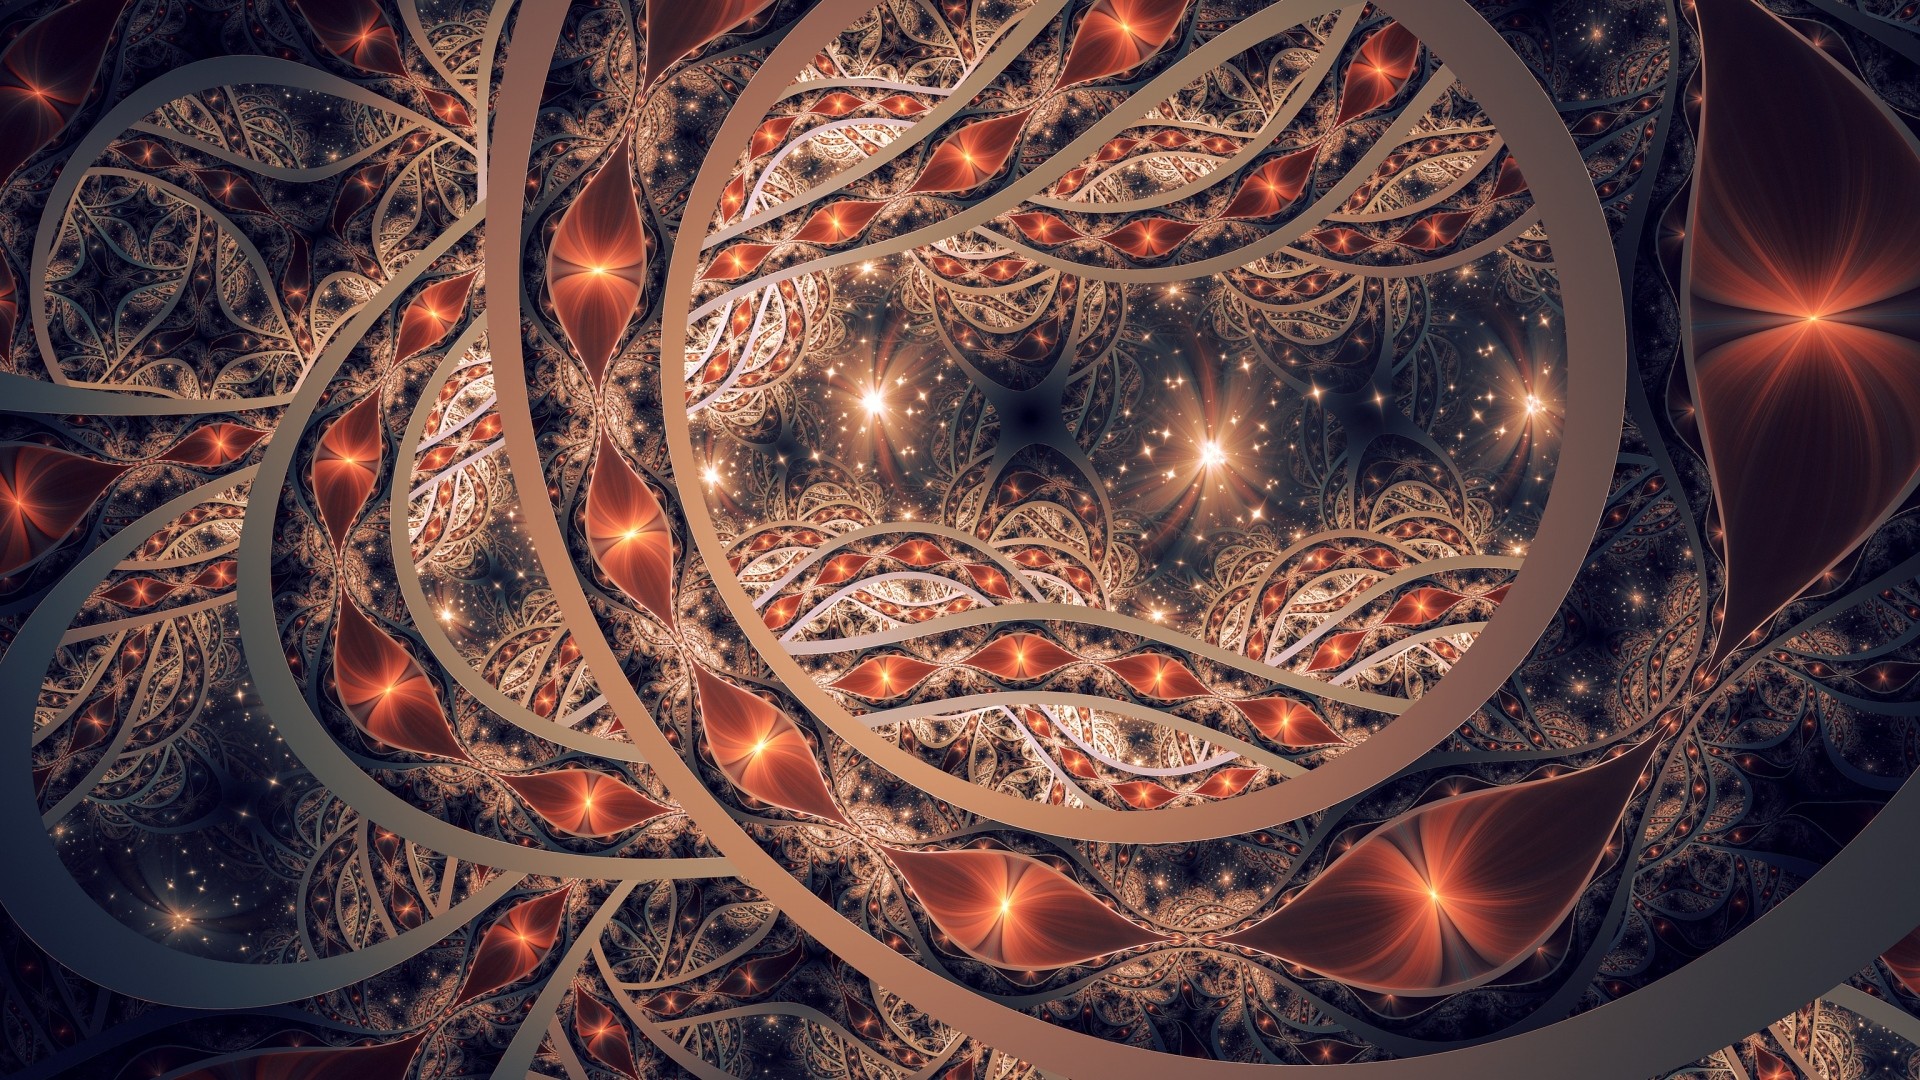 Background Full HD 1080p. Wallpaper fractal, patterns, abstract, dark